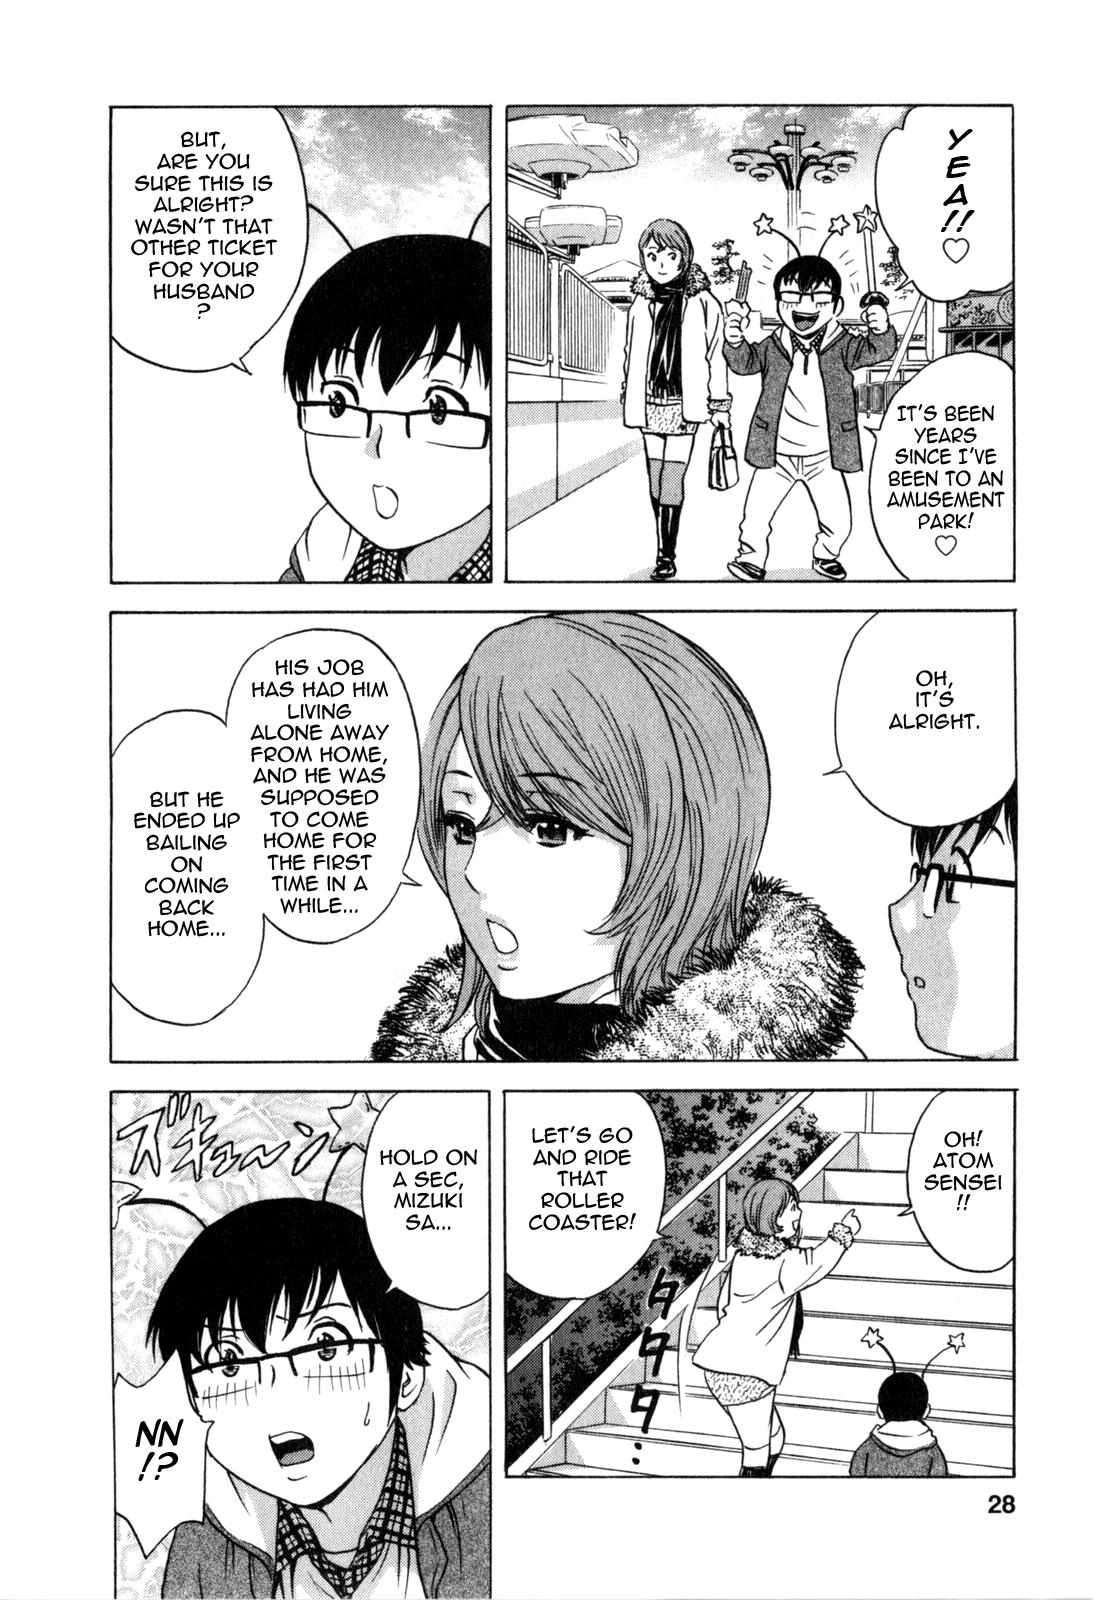 [Hidemaru] Life with Married Women Just Like a Manga 3 - Ch. 1-7 [English] {Tadanohito} 30